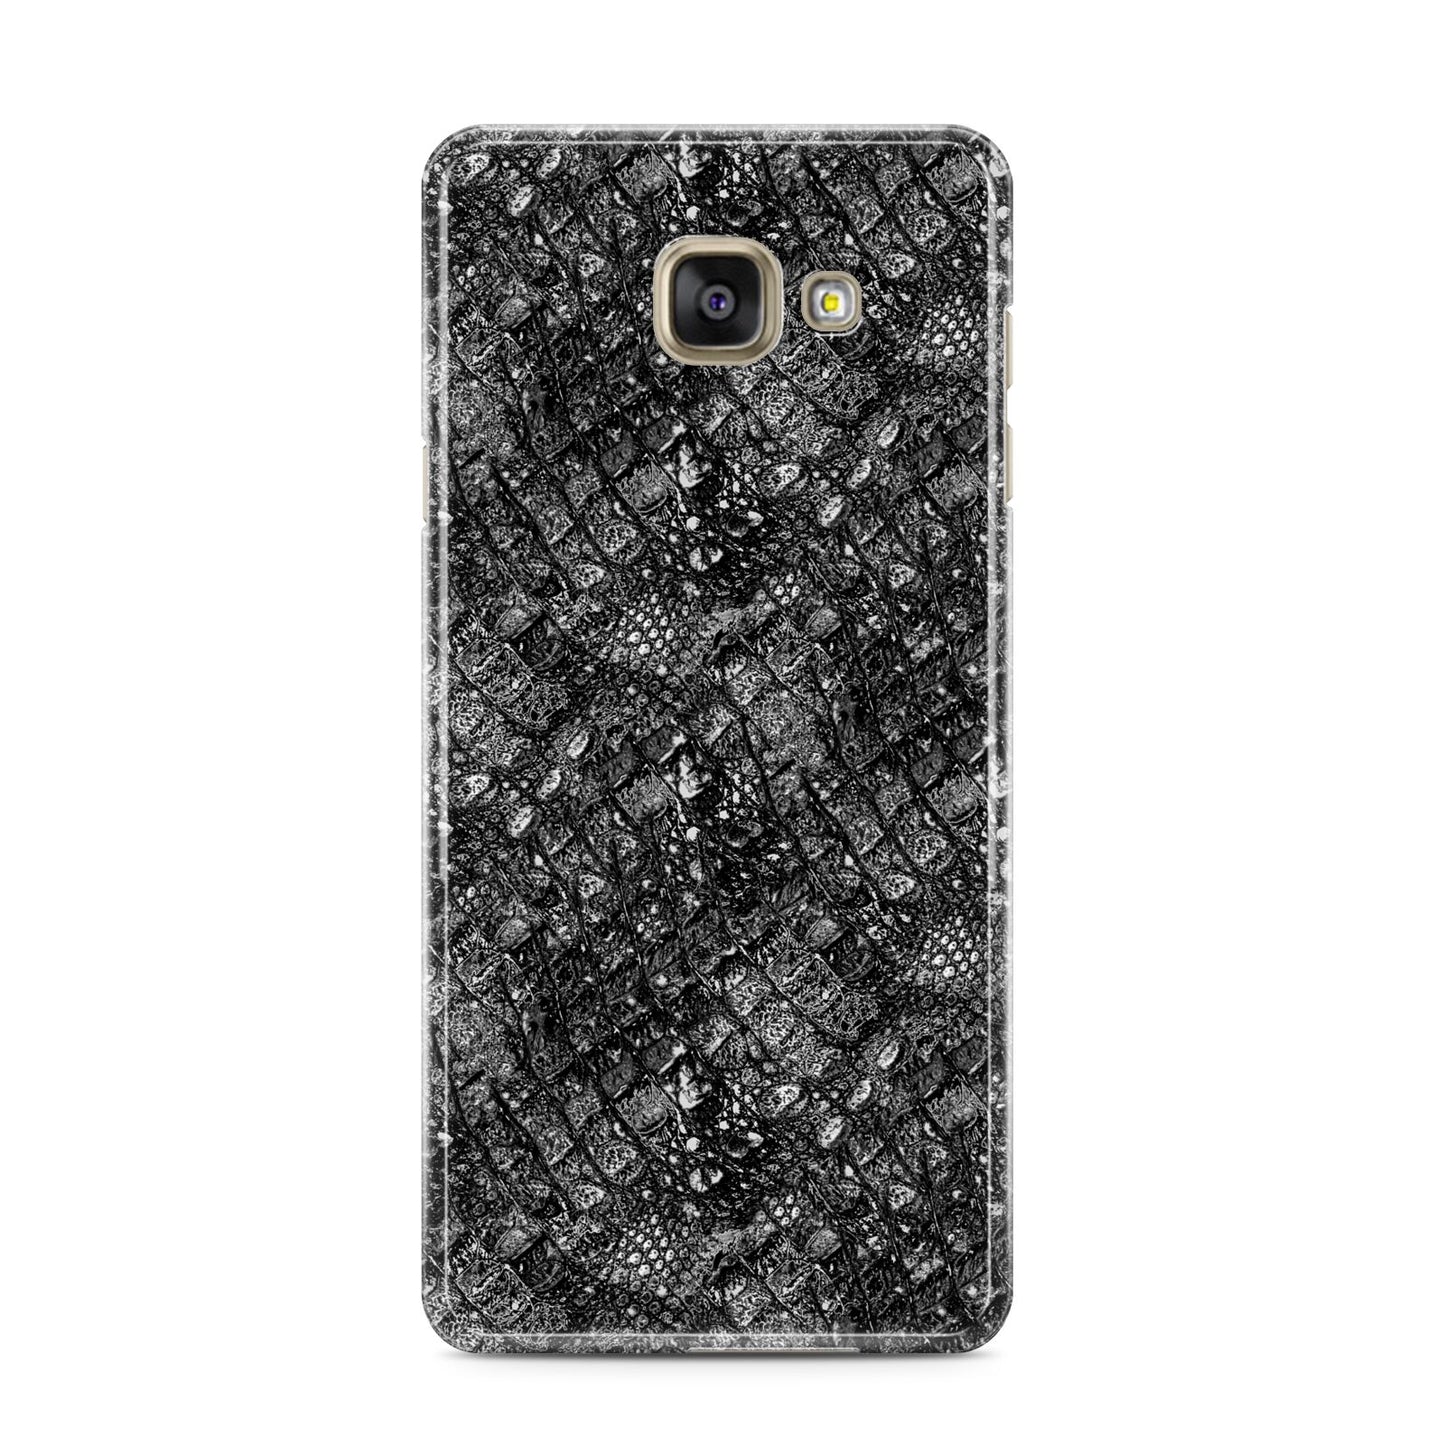 Snakeskin Design Samsung Galaxy A3 2016 Case on gold phone